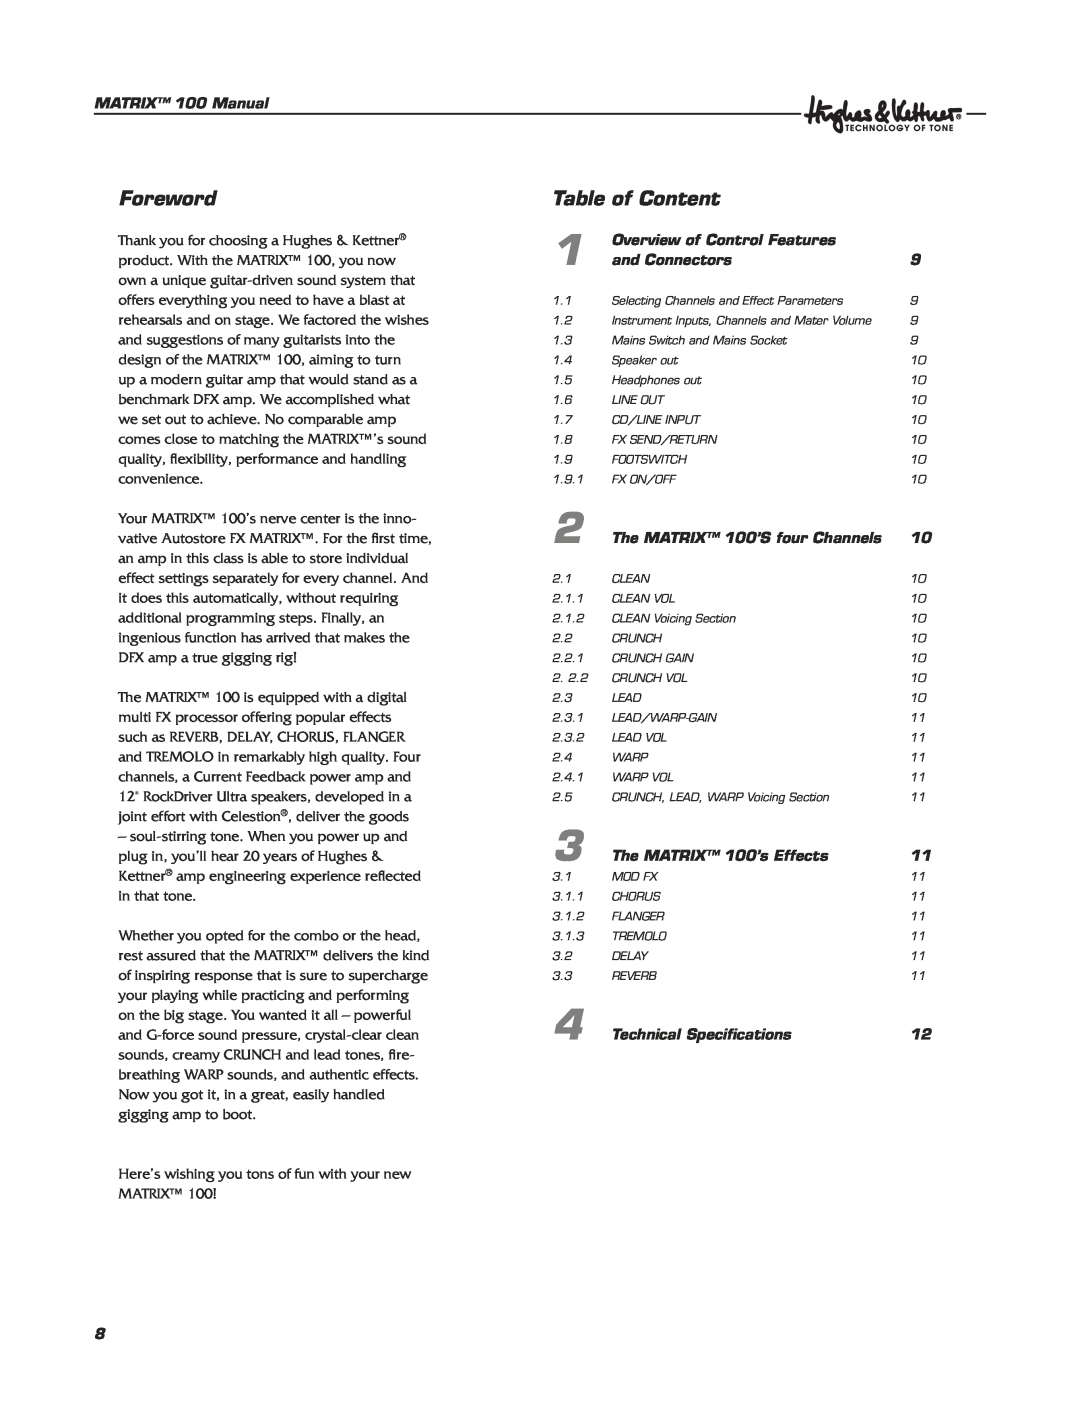 Hughes & Kettner Matrix 100 manual Foreword, Table of Content 